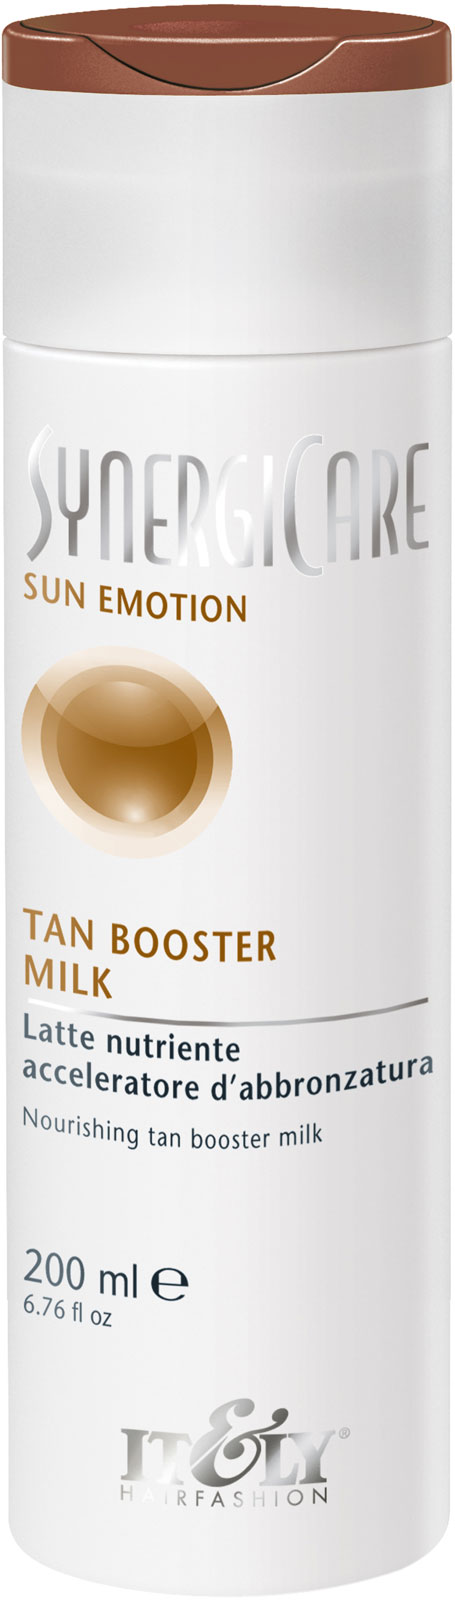 фото Эмульсия для лица и тела Itely Hairfashion для ускорения загара Tan Booster Milk 200 ml